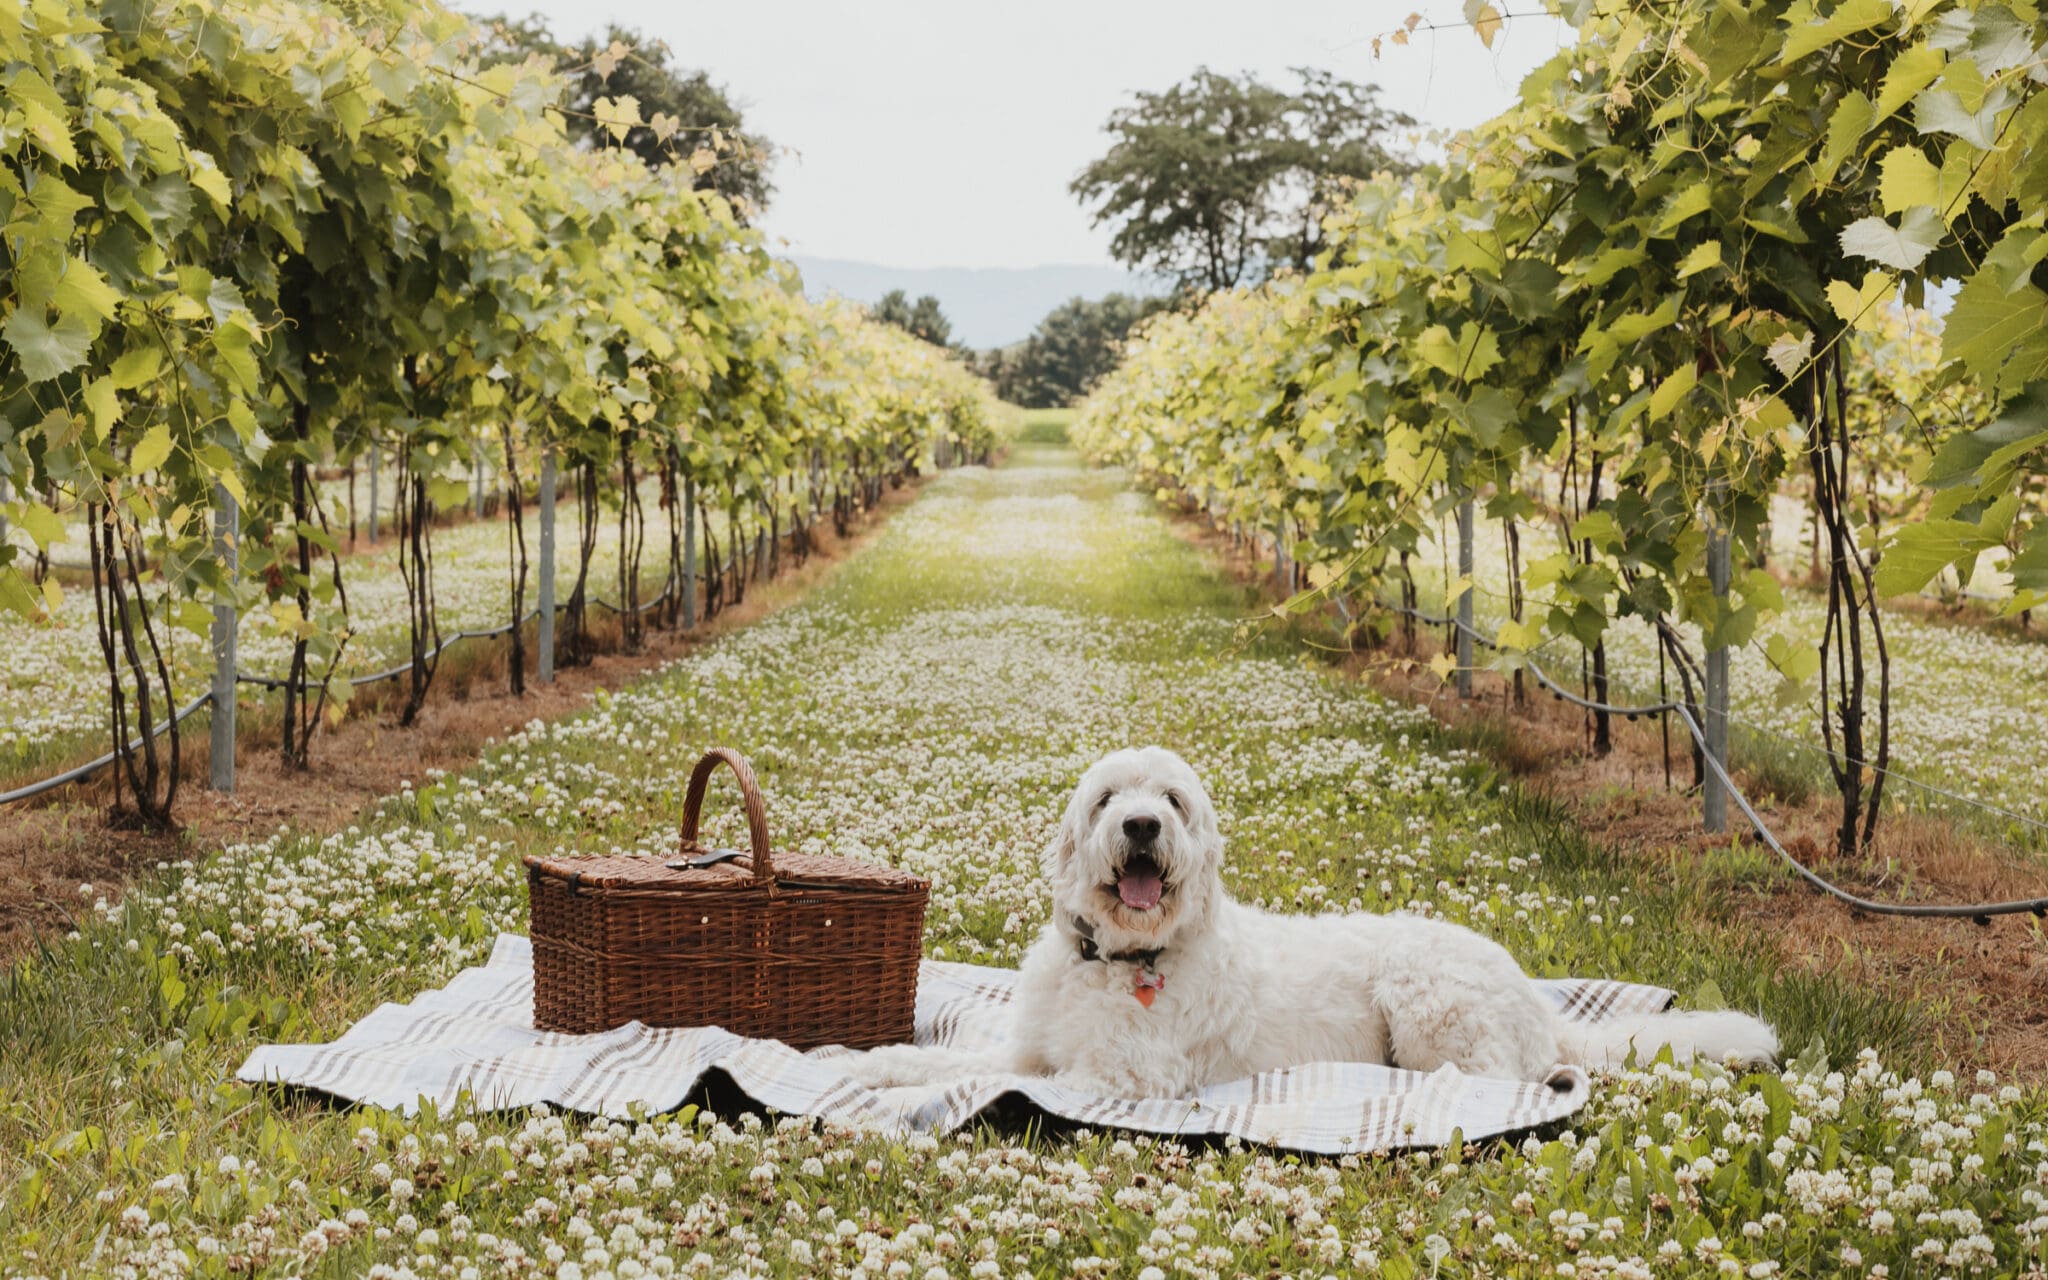 A dog sitting on a blanket in a vineyard.